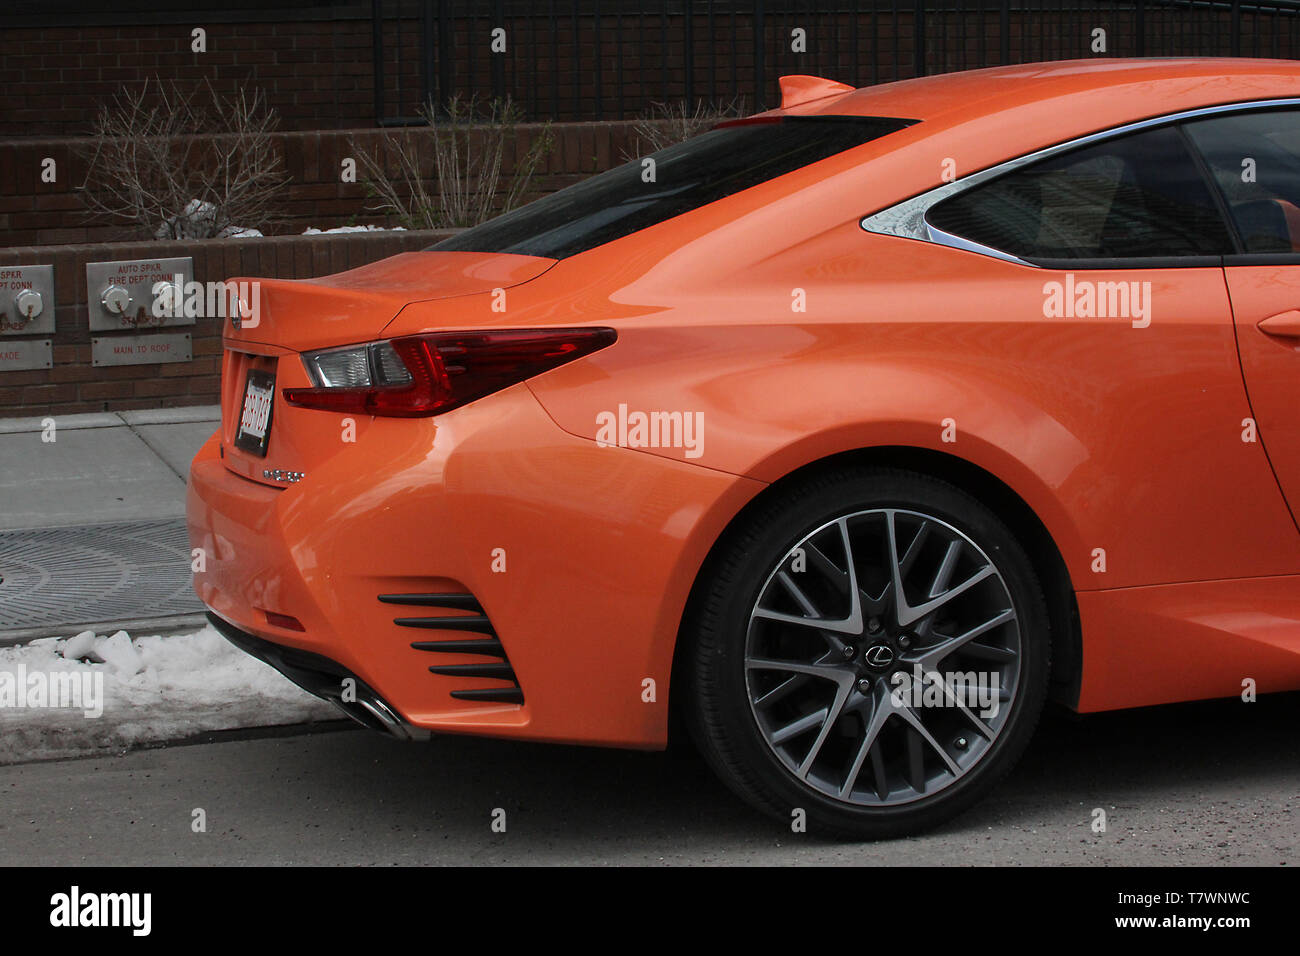 Classy looking orange sports car in Calgary, Alberta, Canada Stock Photo